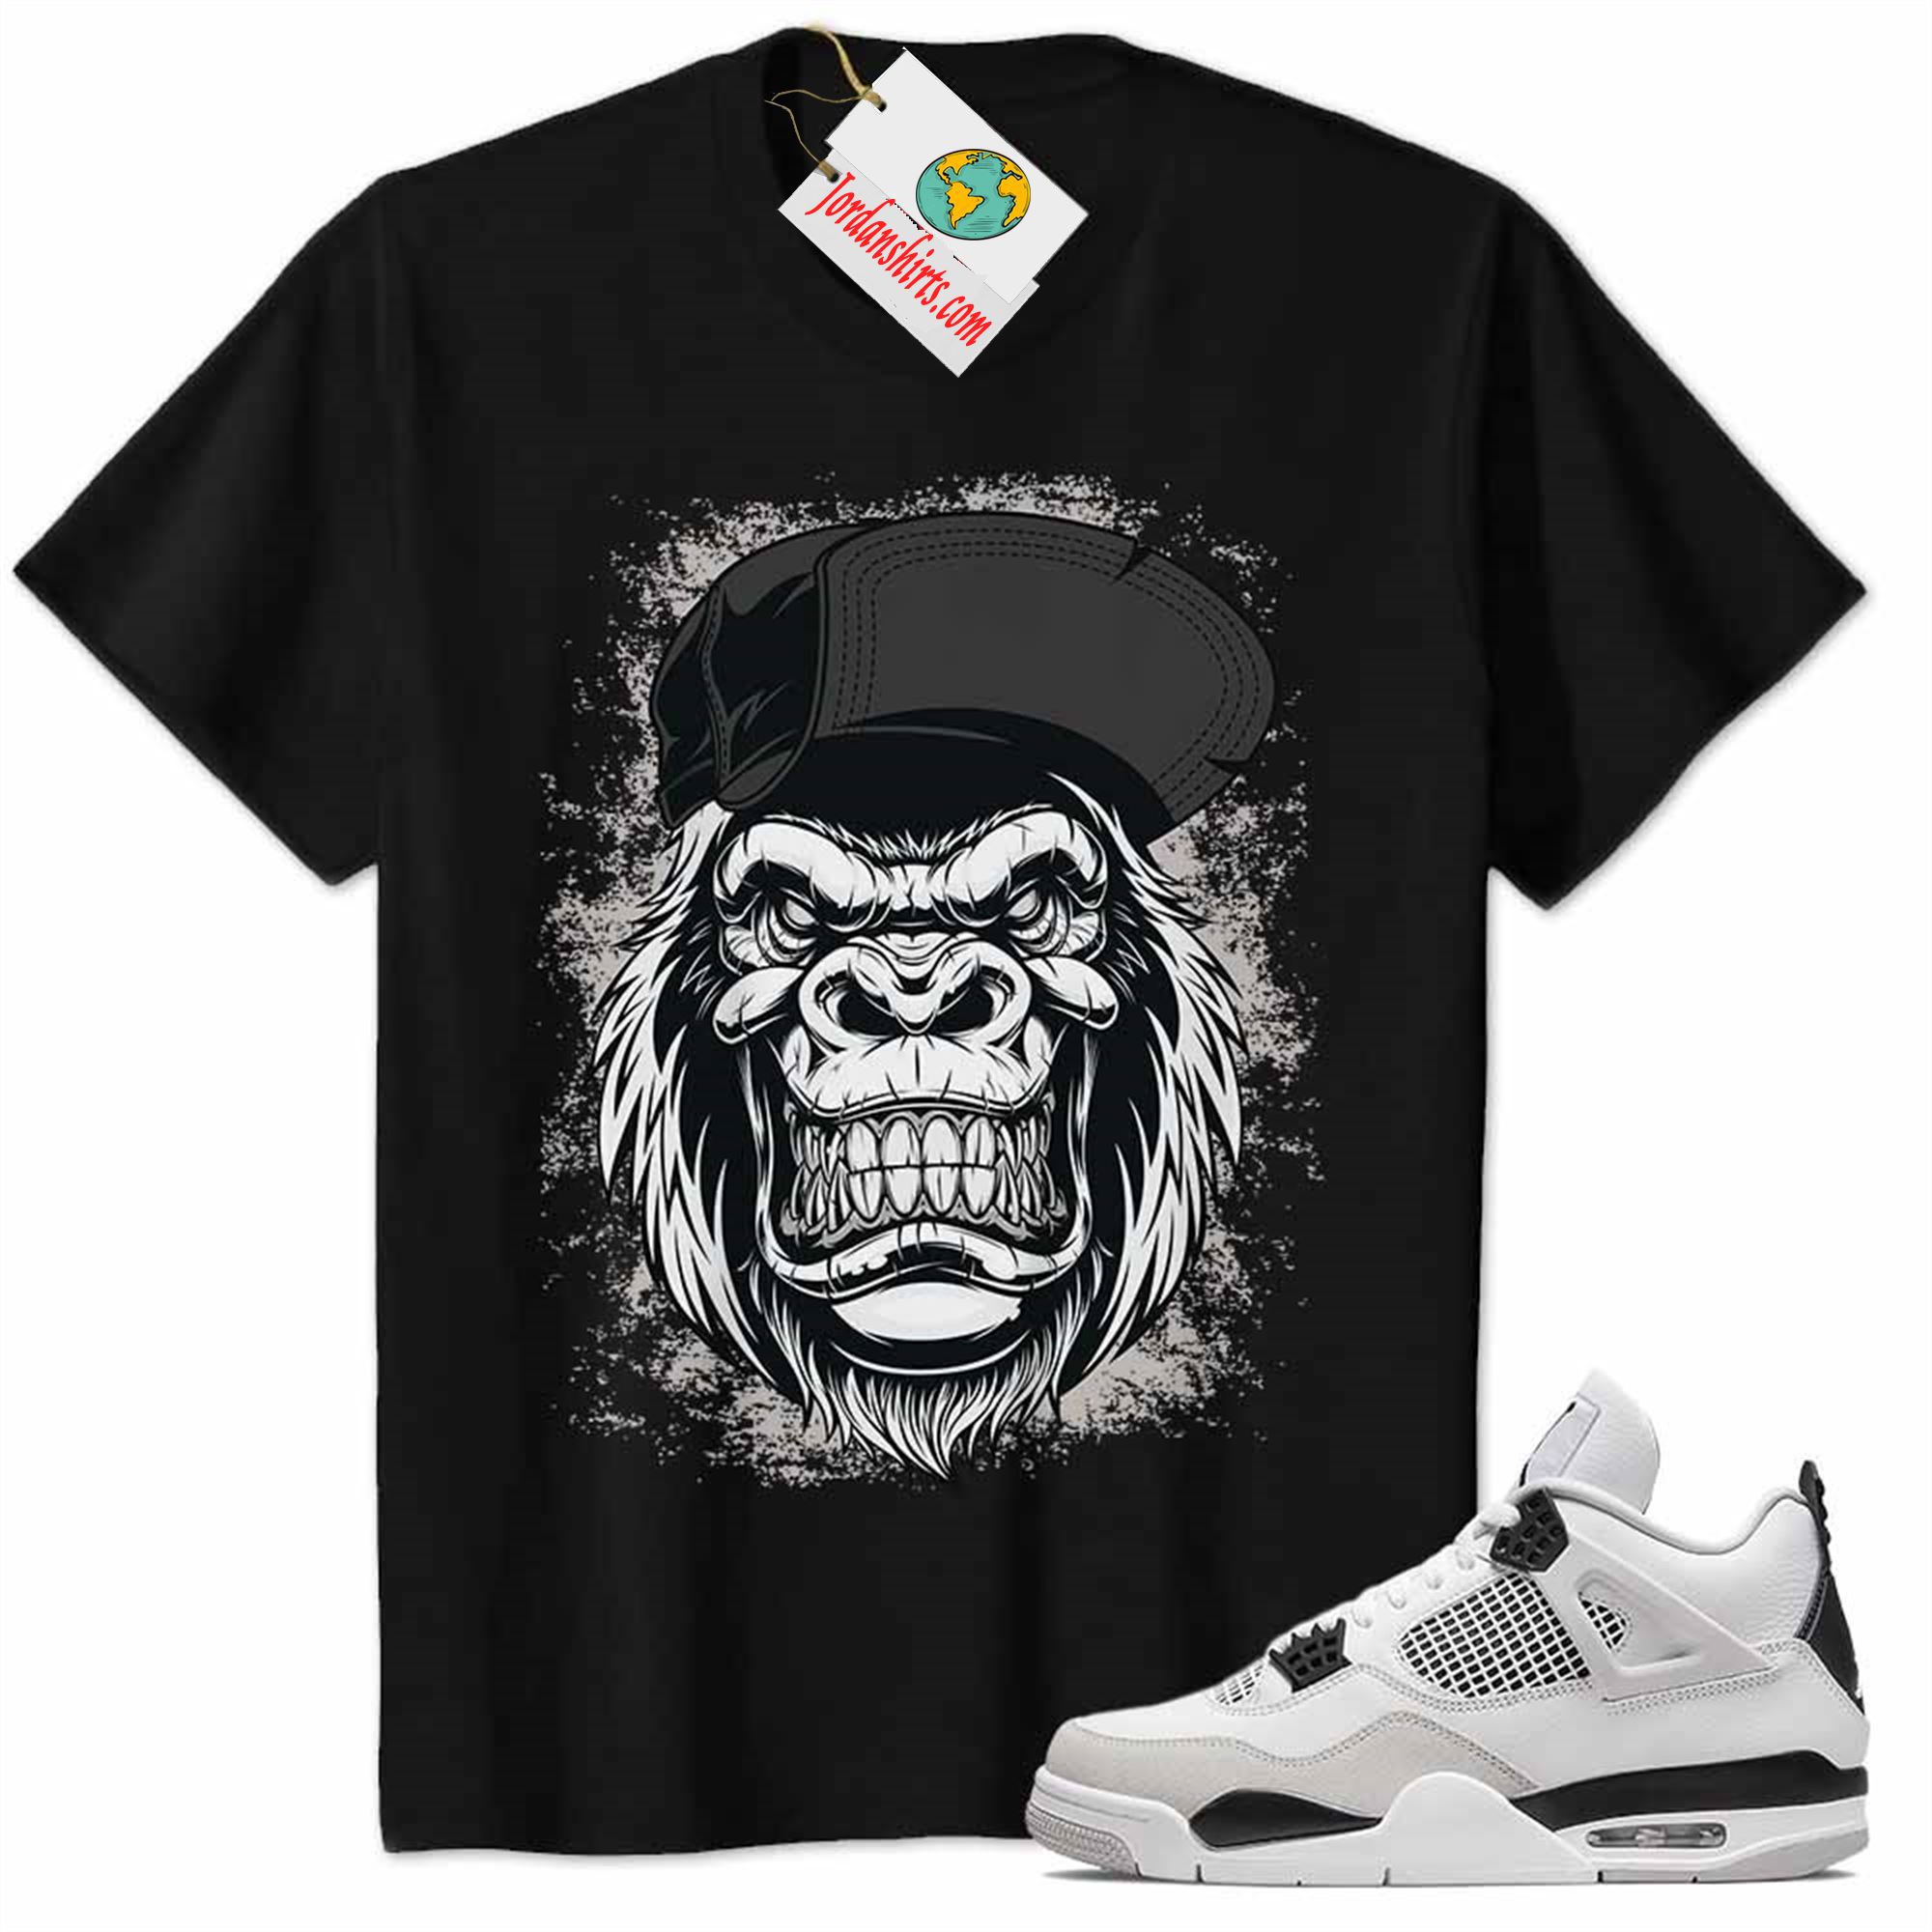 Jordan 4 Shirt, Jordan 4 Military Black Shirt Shirt Ferocious Gorilla Black Size Up To 5xl